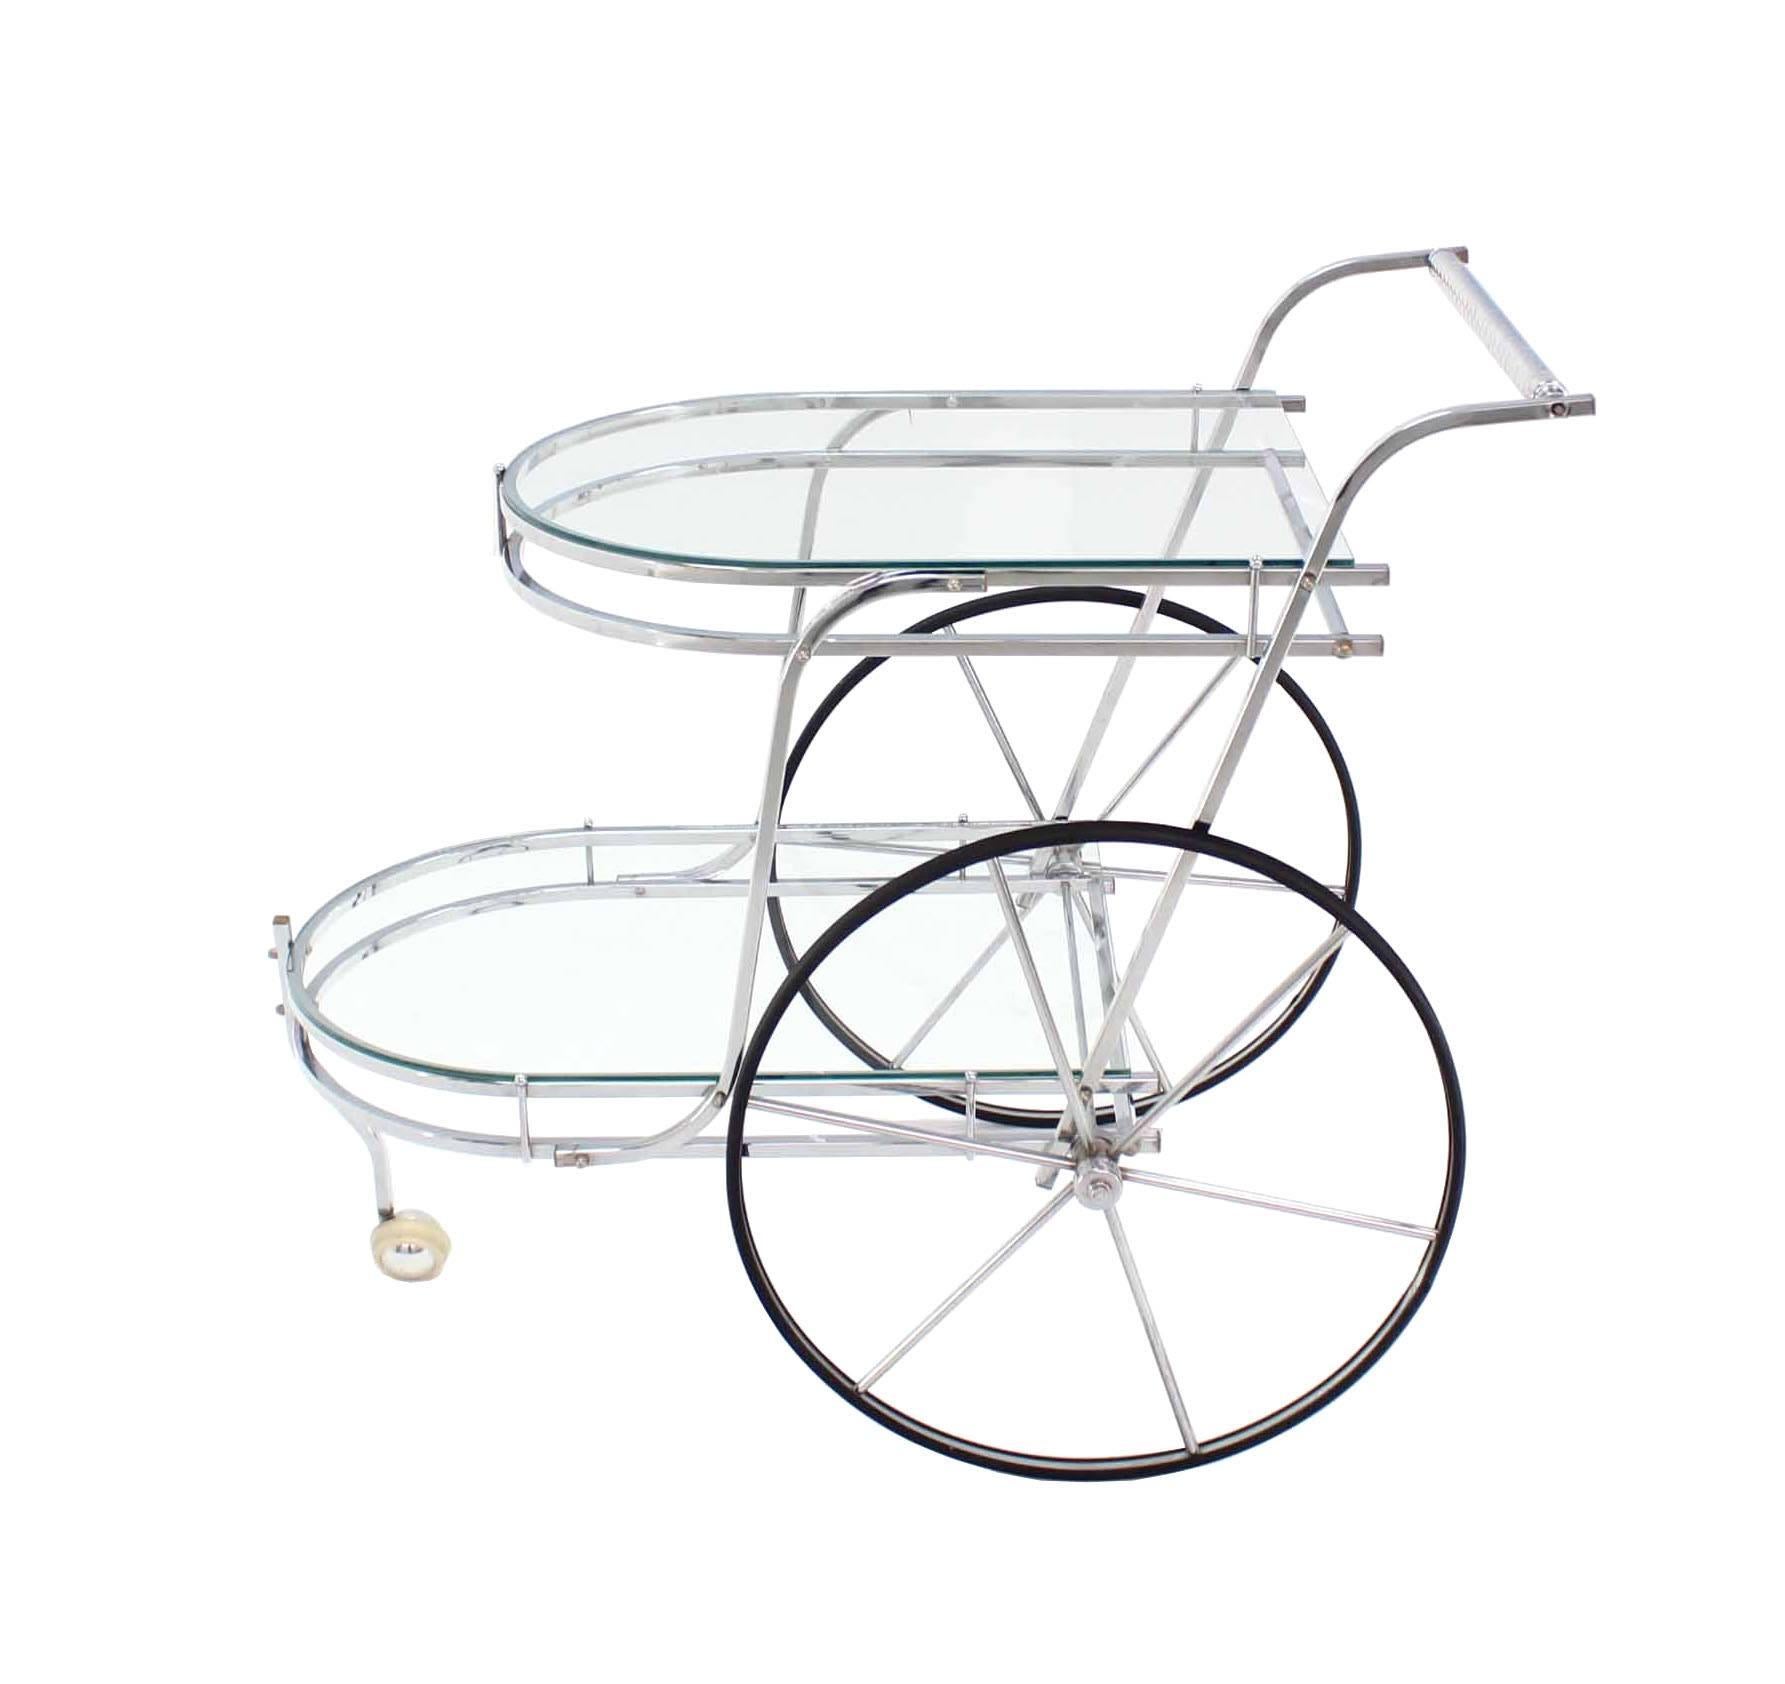 Nice Mid-Century Modern polished chrome and glass rolling bar tea cart.